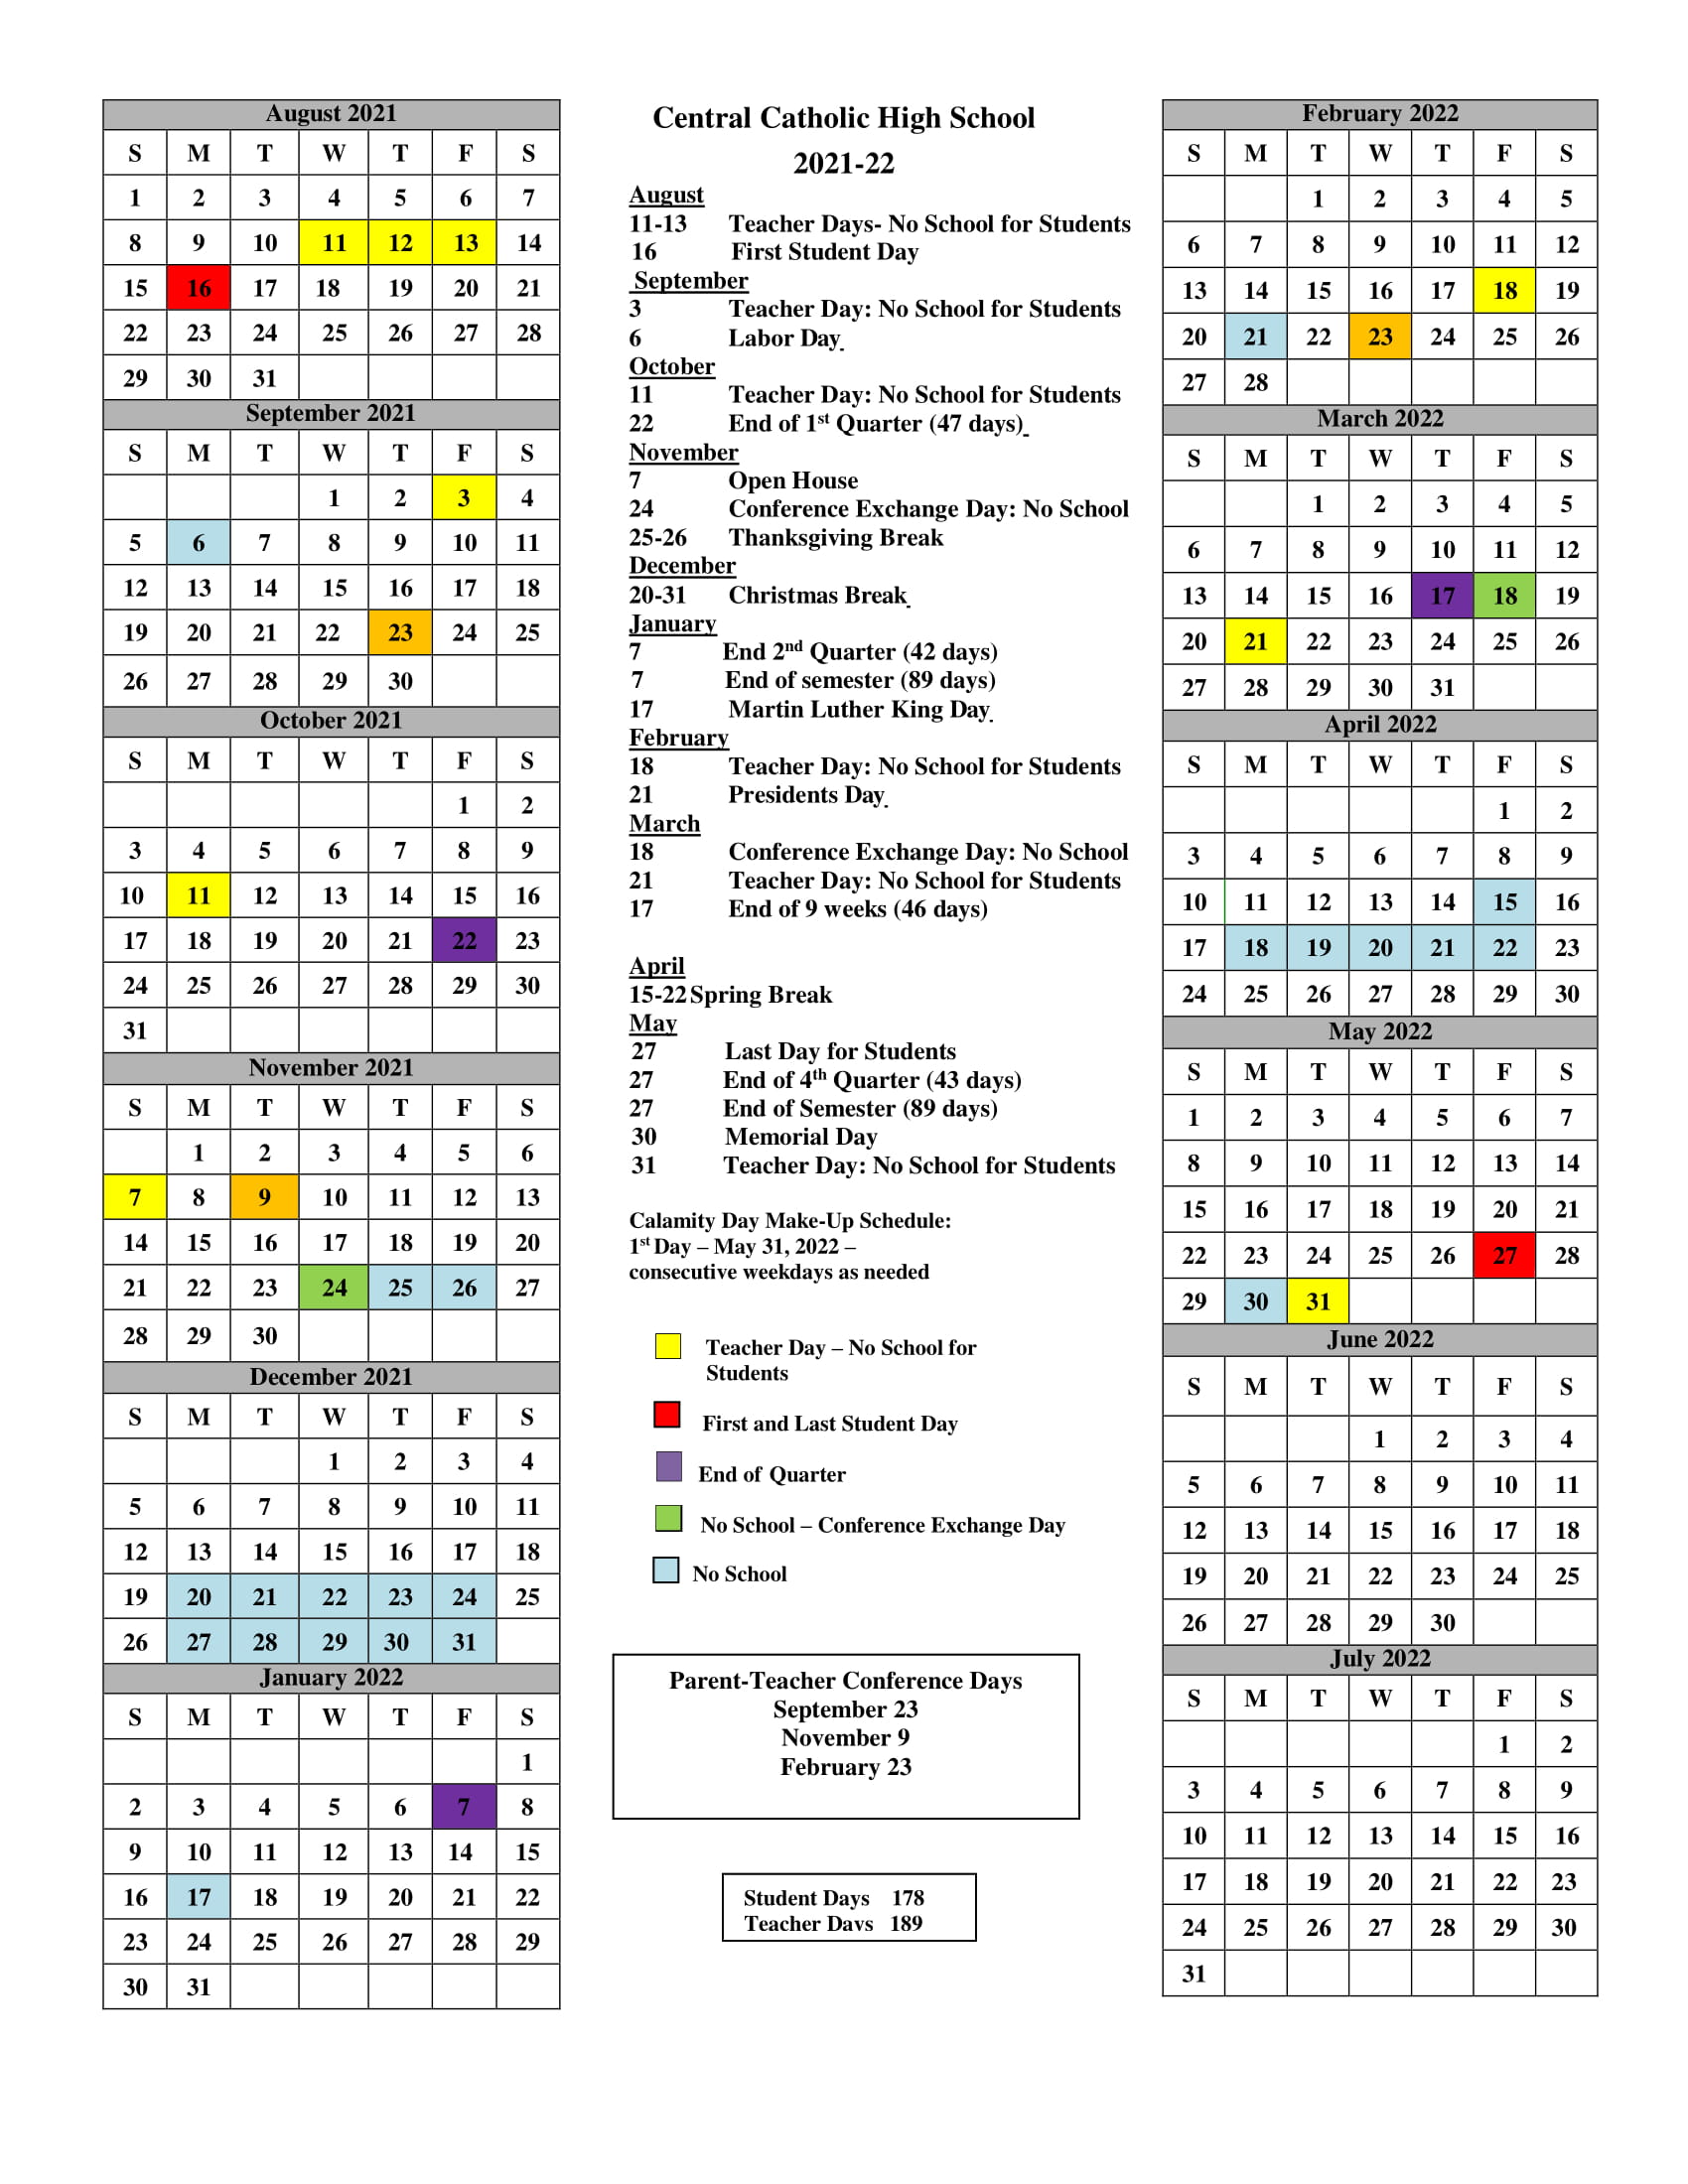 Ohio University Calendar 2022 2023 Academic Calendar 2021-2022